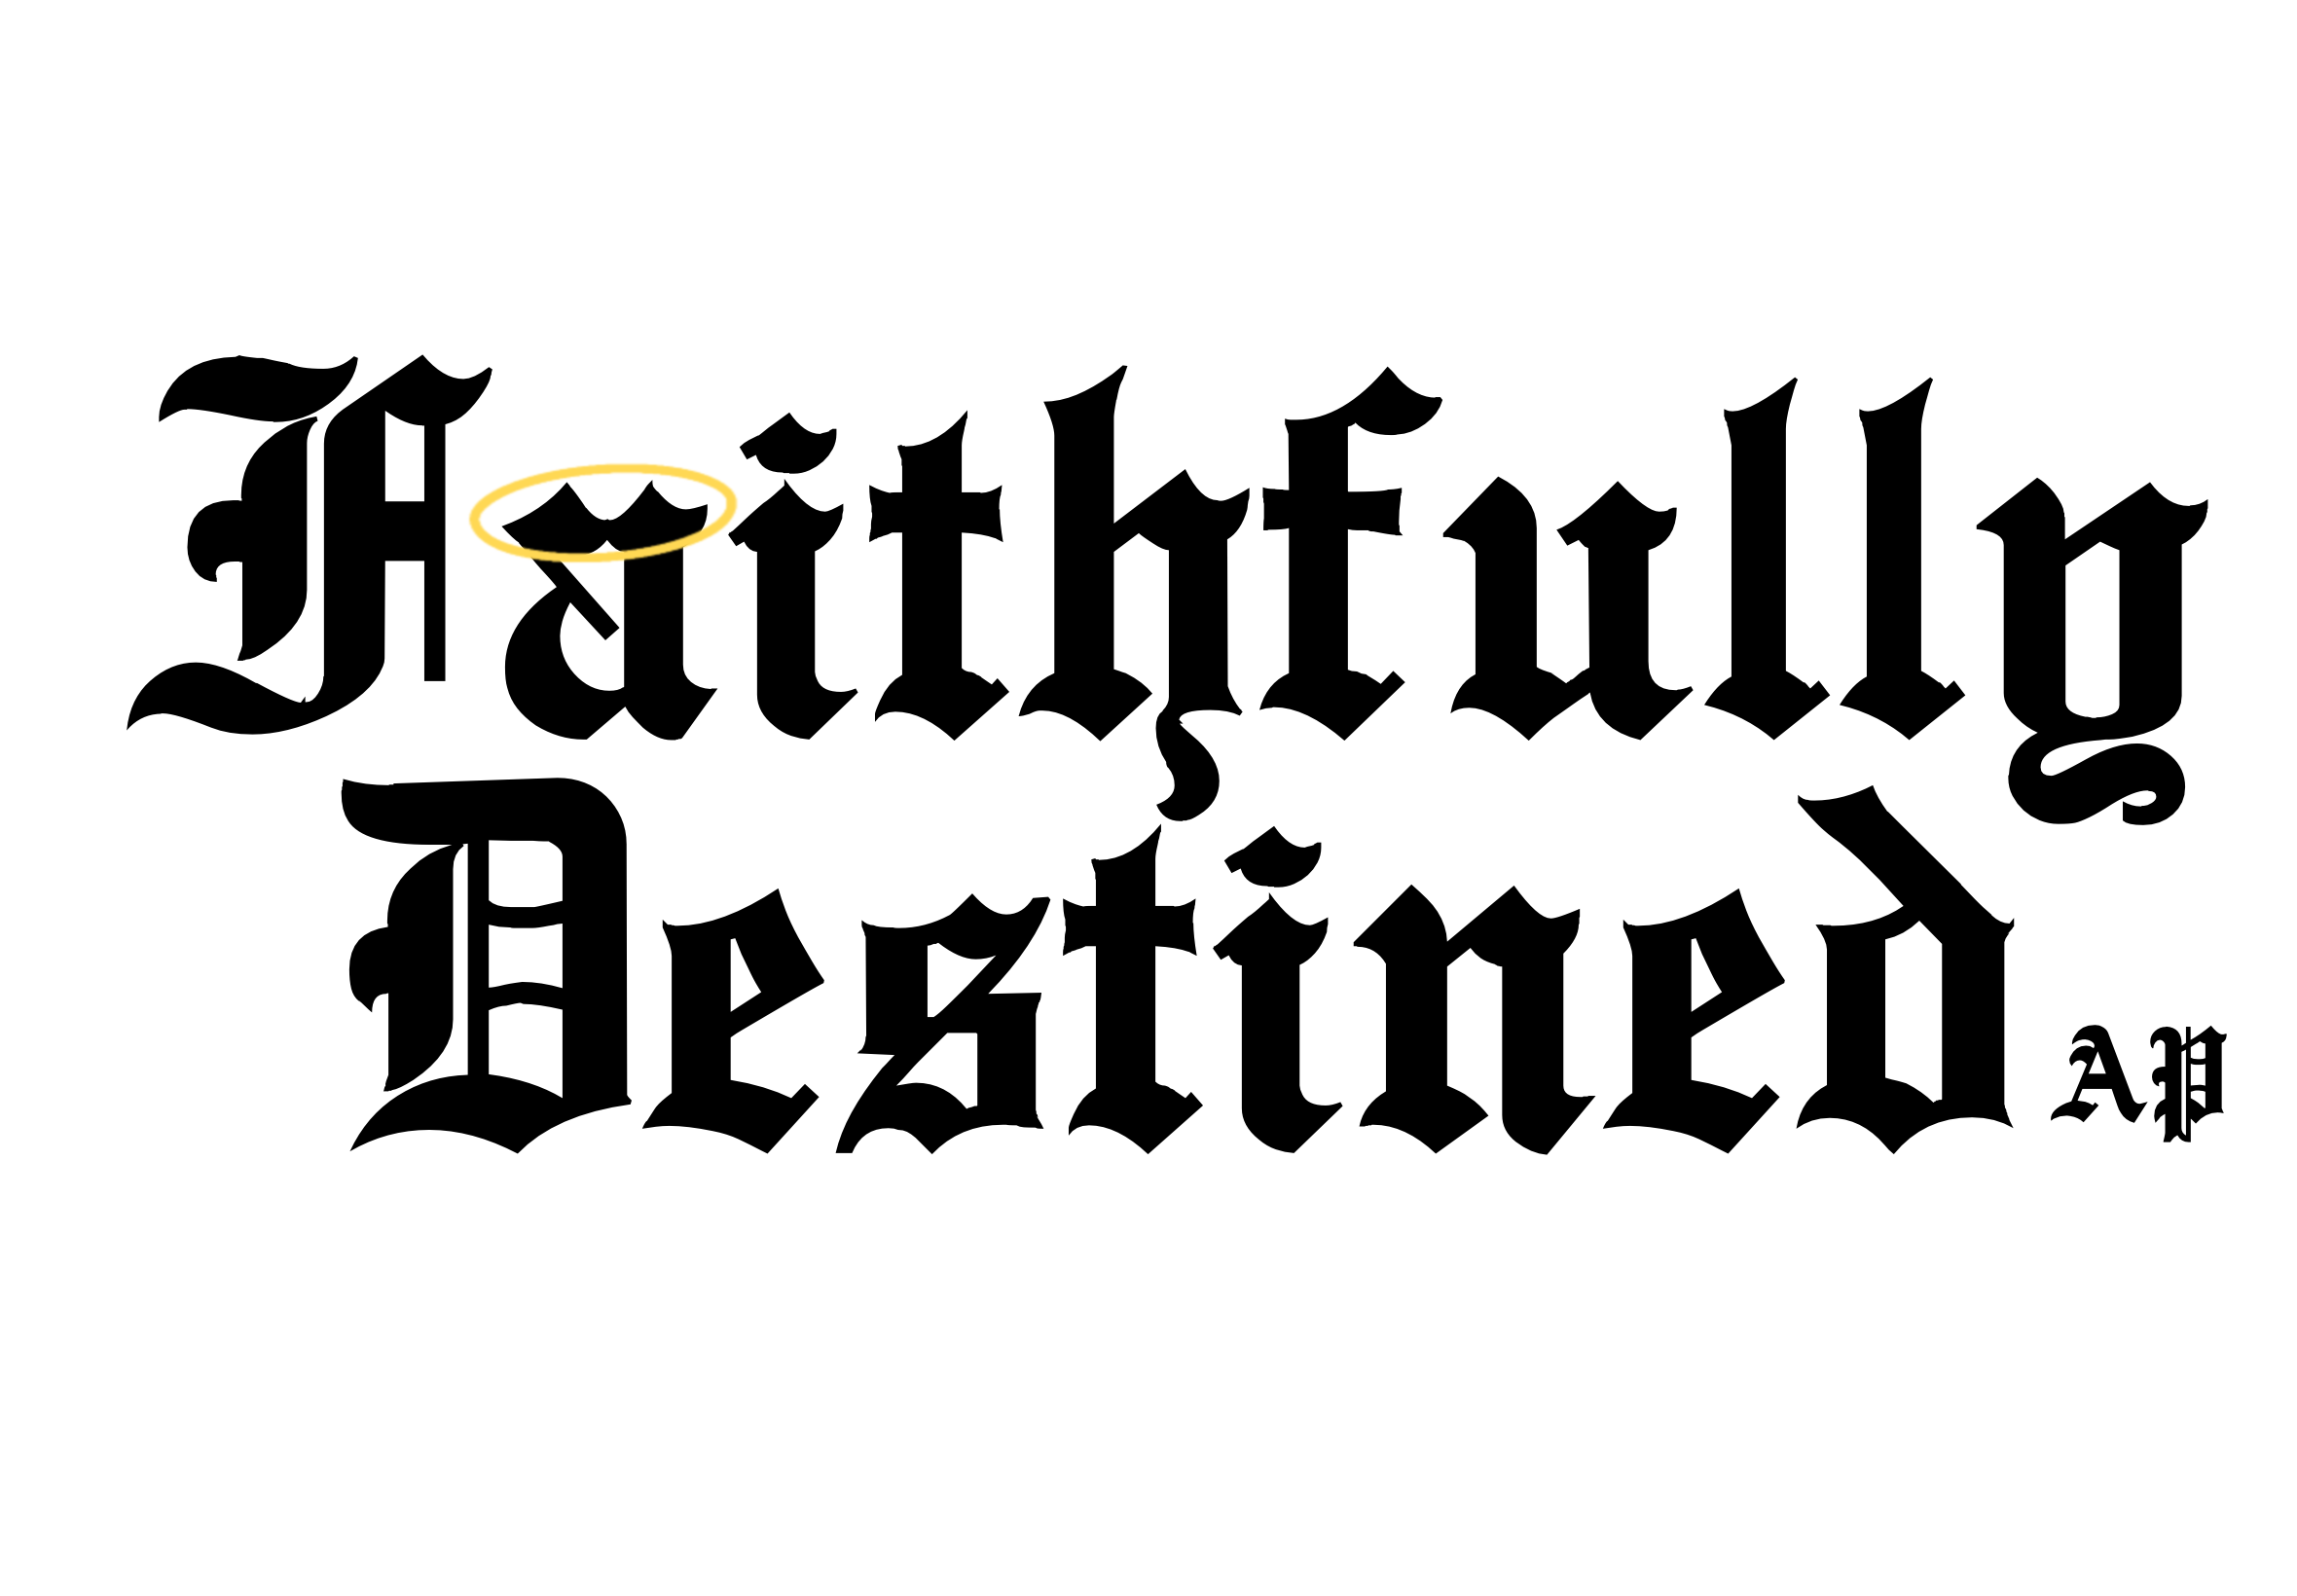 FaithfullyDestined